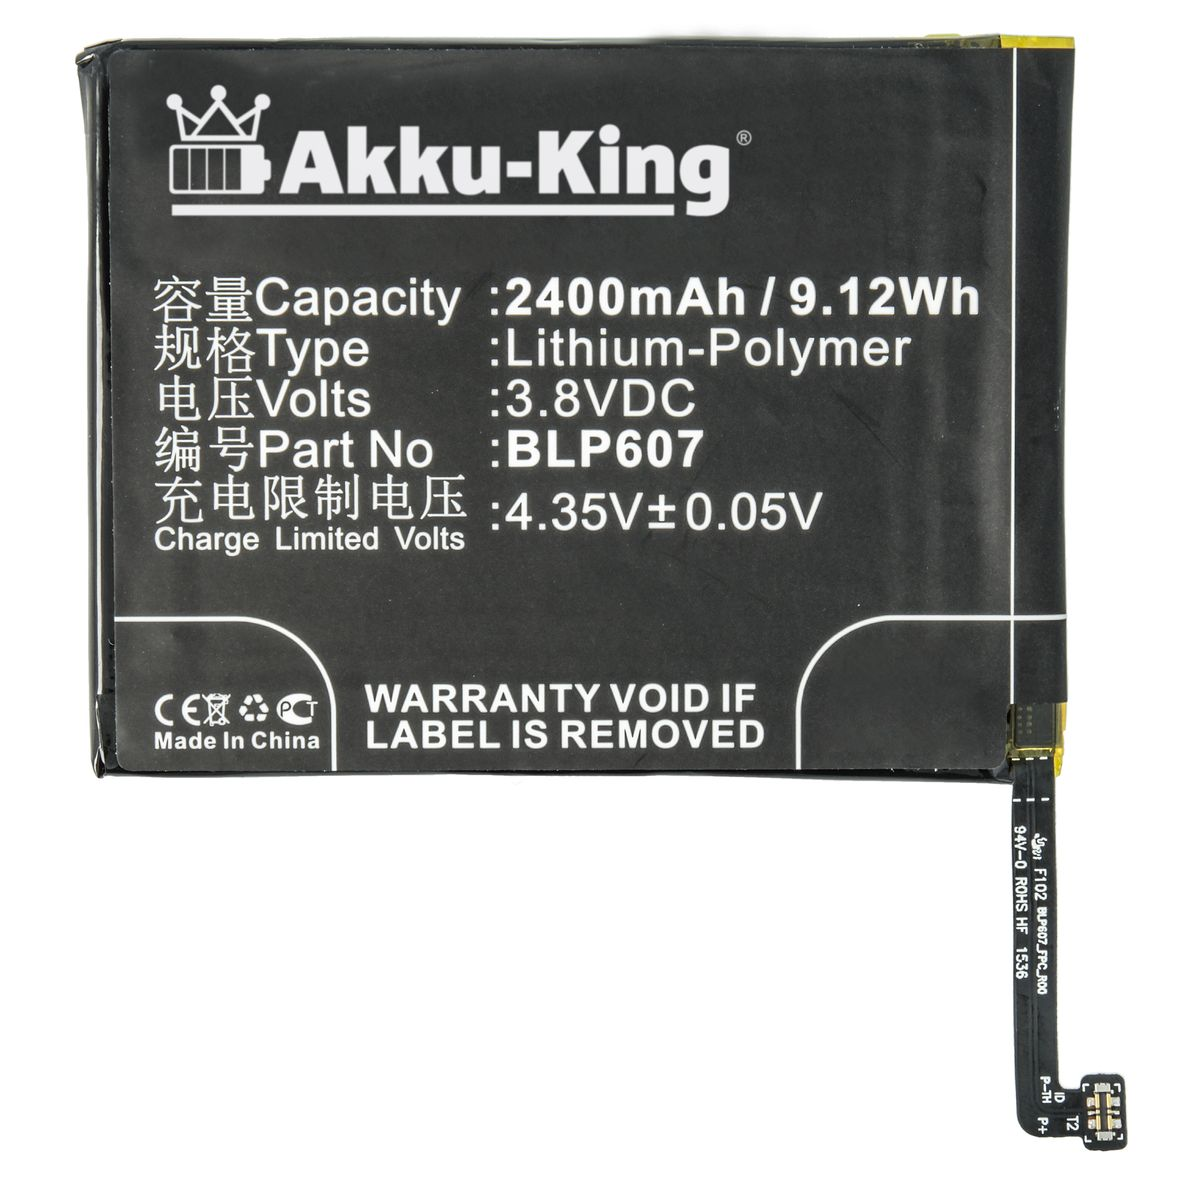 Handy-Akku, AKKU-KING Oneplus BLP607 2400mAh mit Volt, Akku Li-Polymer 3.8 kompatibel